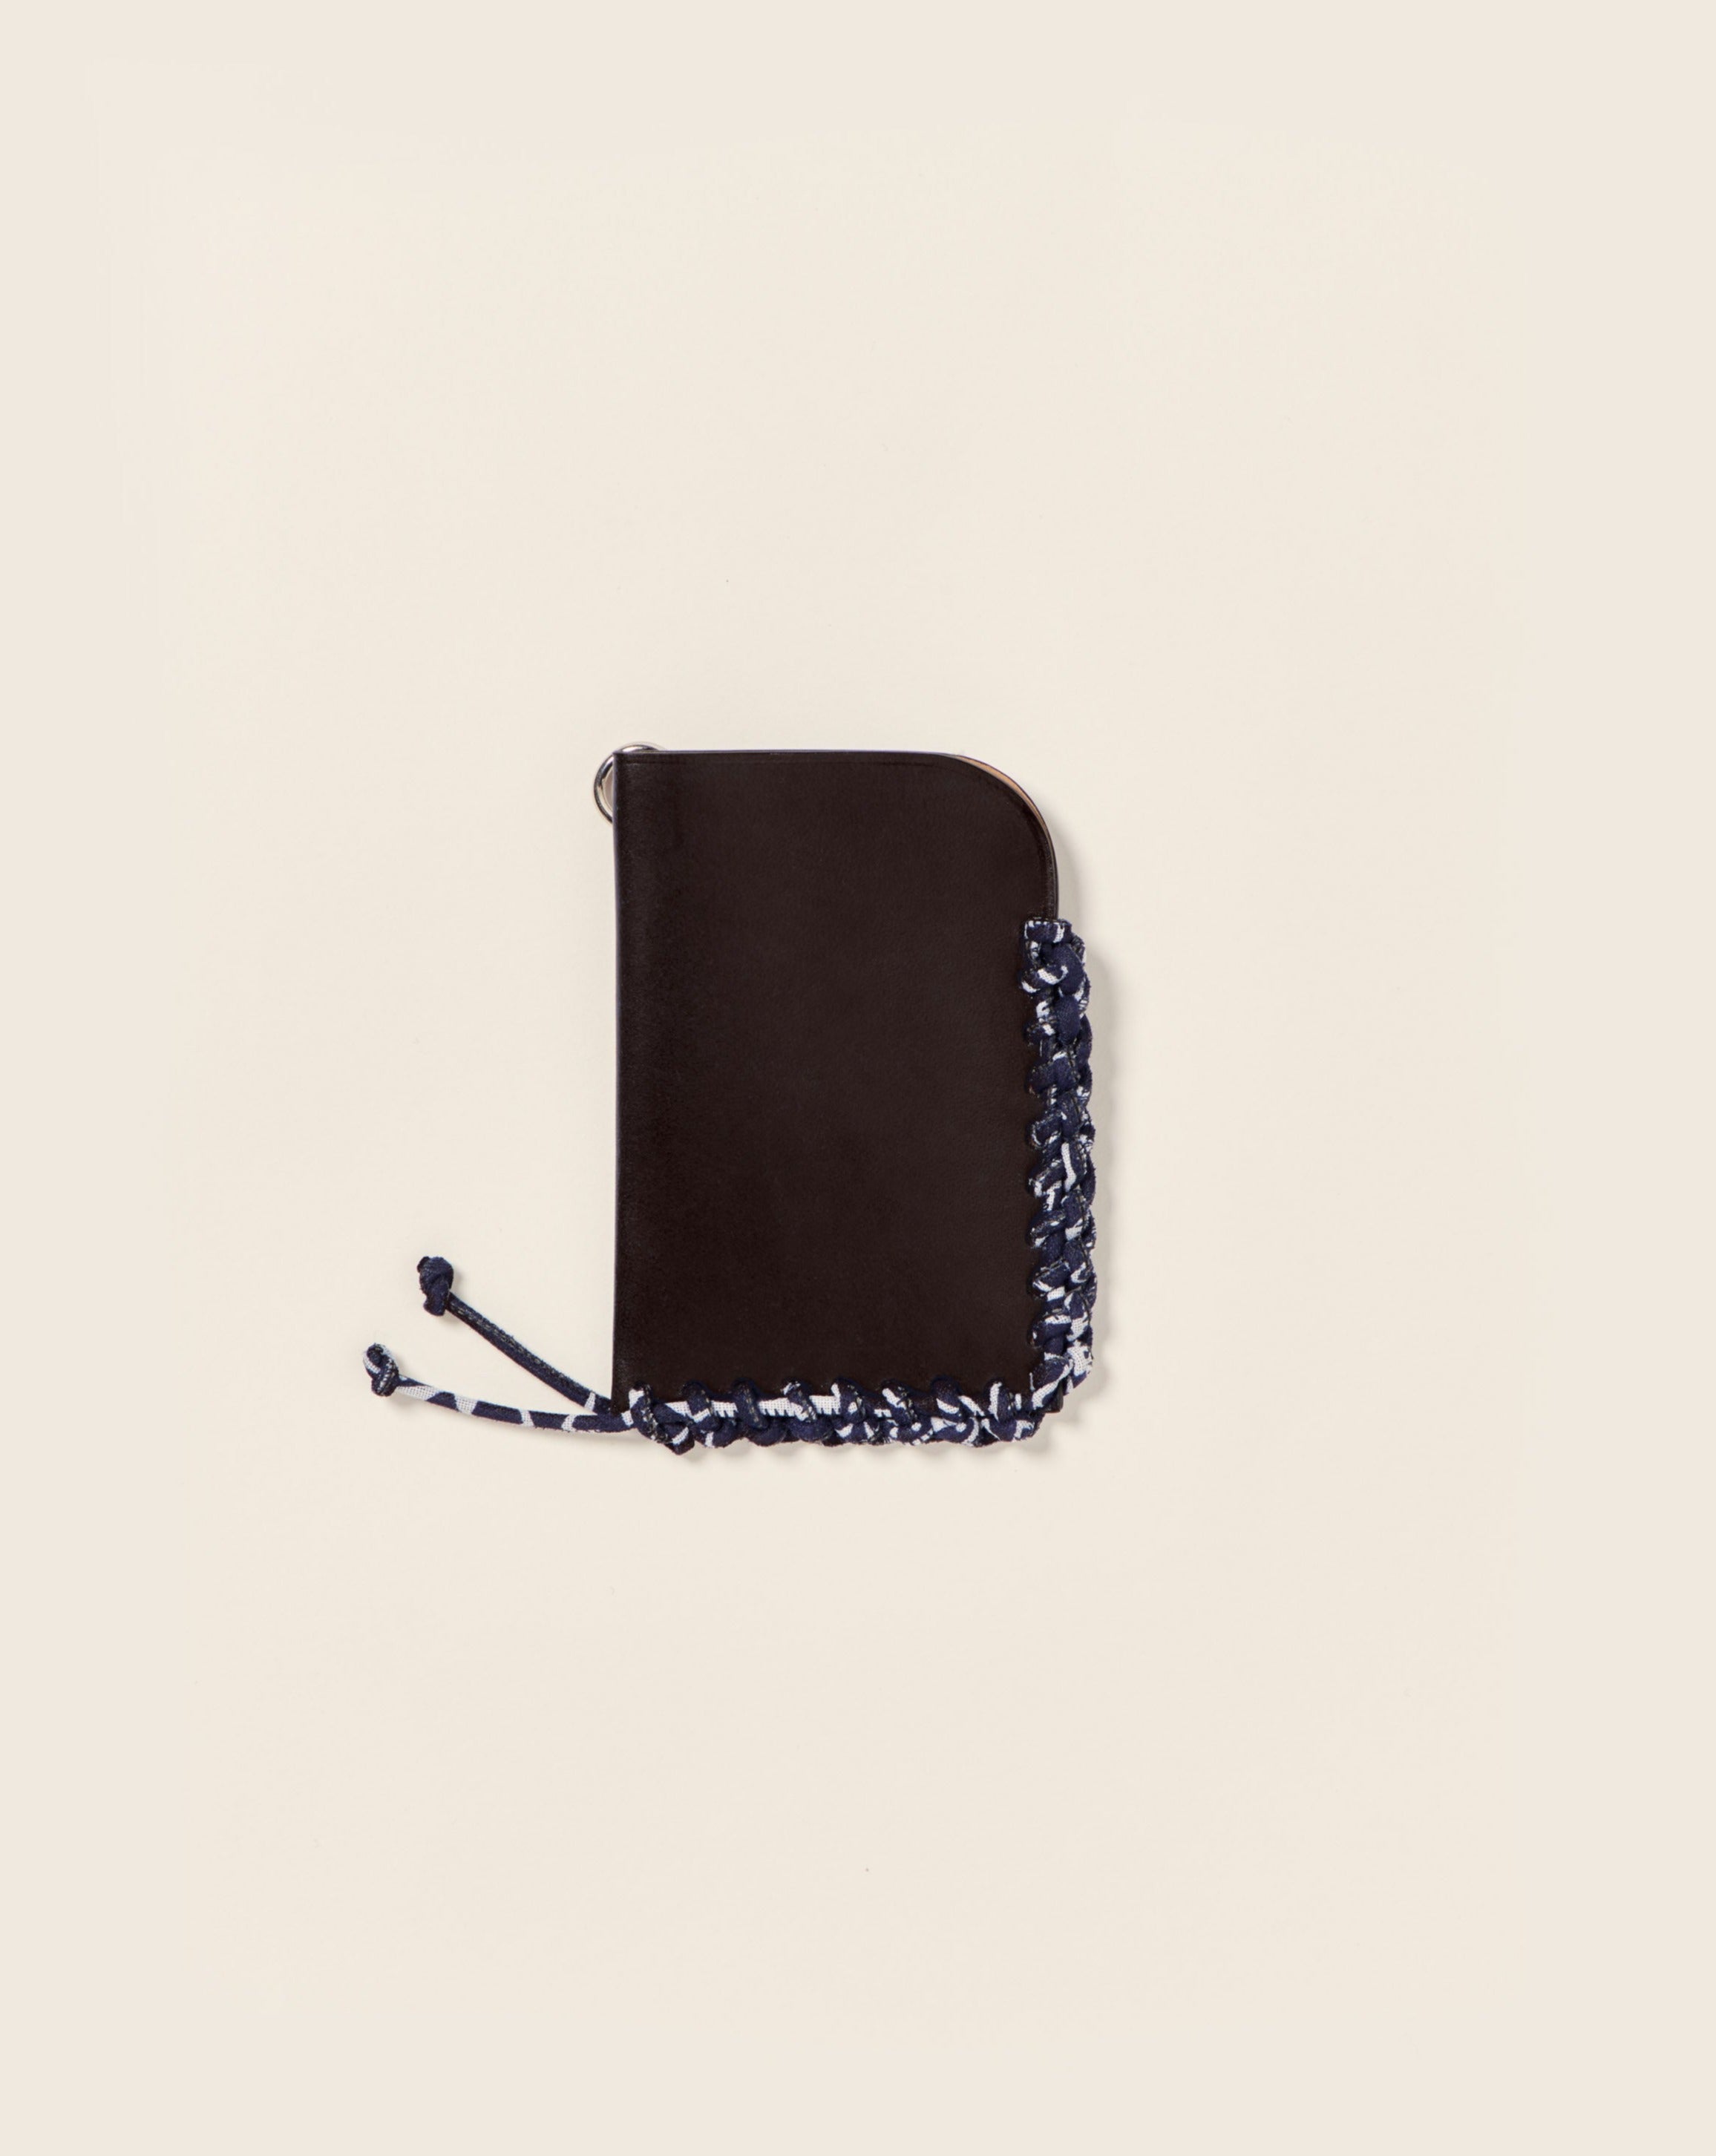 KIBO - Card holder - Black leather & bandana navy